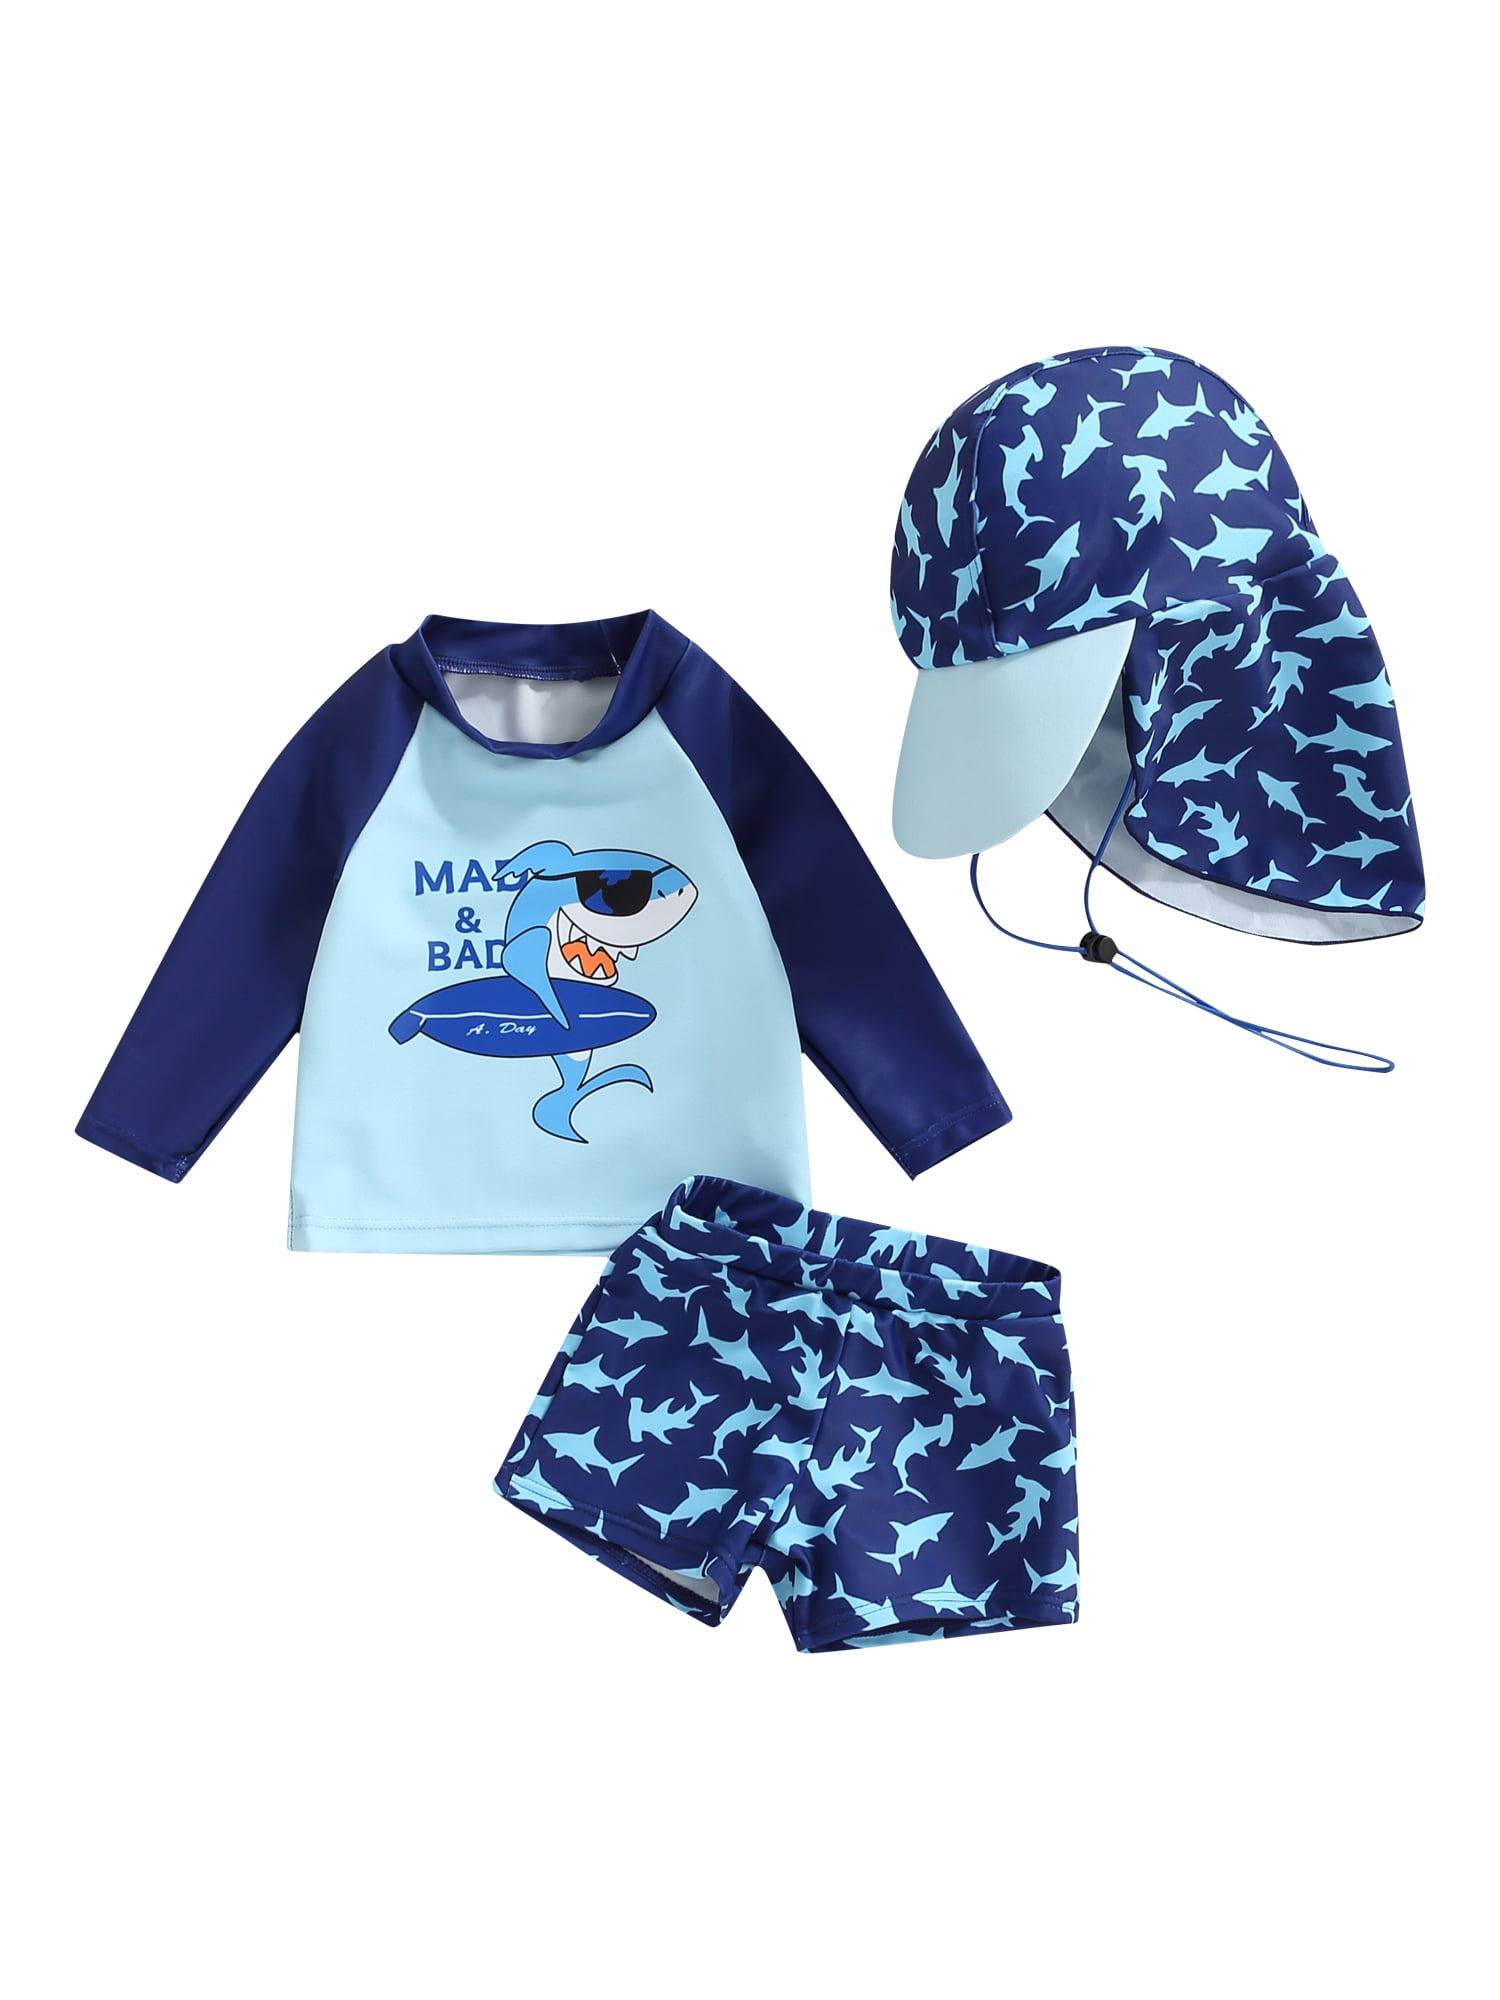 Woshilaocai Toddler Baby 3Pcs Swimwear Set Infant Boy Swimsuit with Hat ...